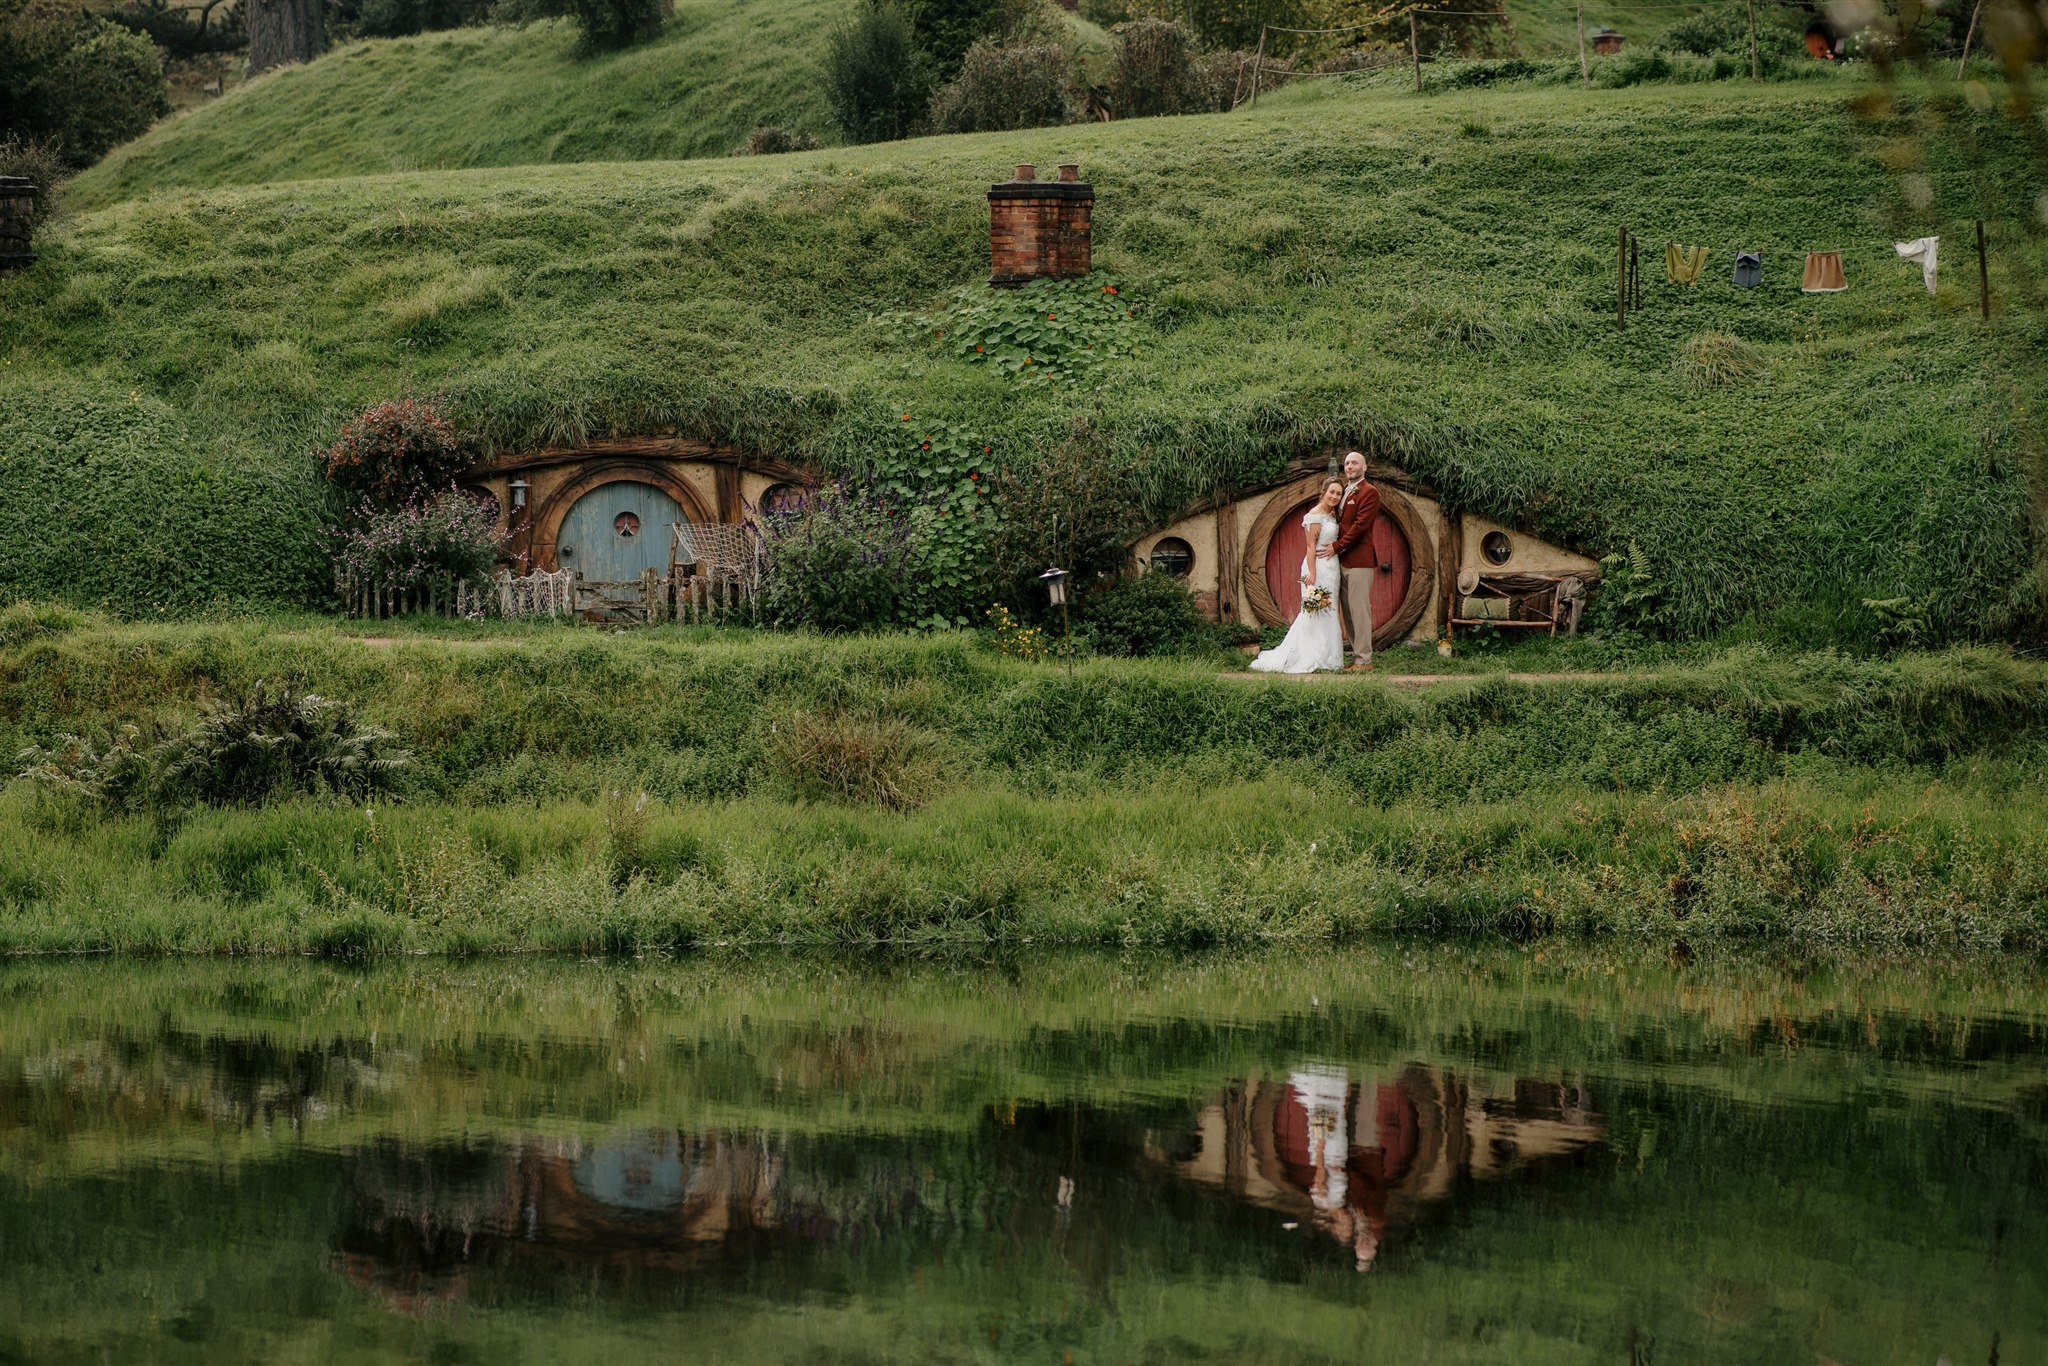 Matamata wedding venue | Hobbiton Tour | Auckland Wedding Videographer| Best Photographer| Top Videography | Wedding Couples Photography | The Green Dragon Inn | Dear White Productions